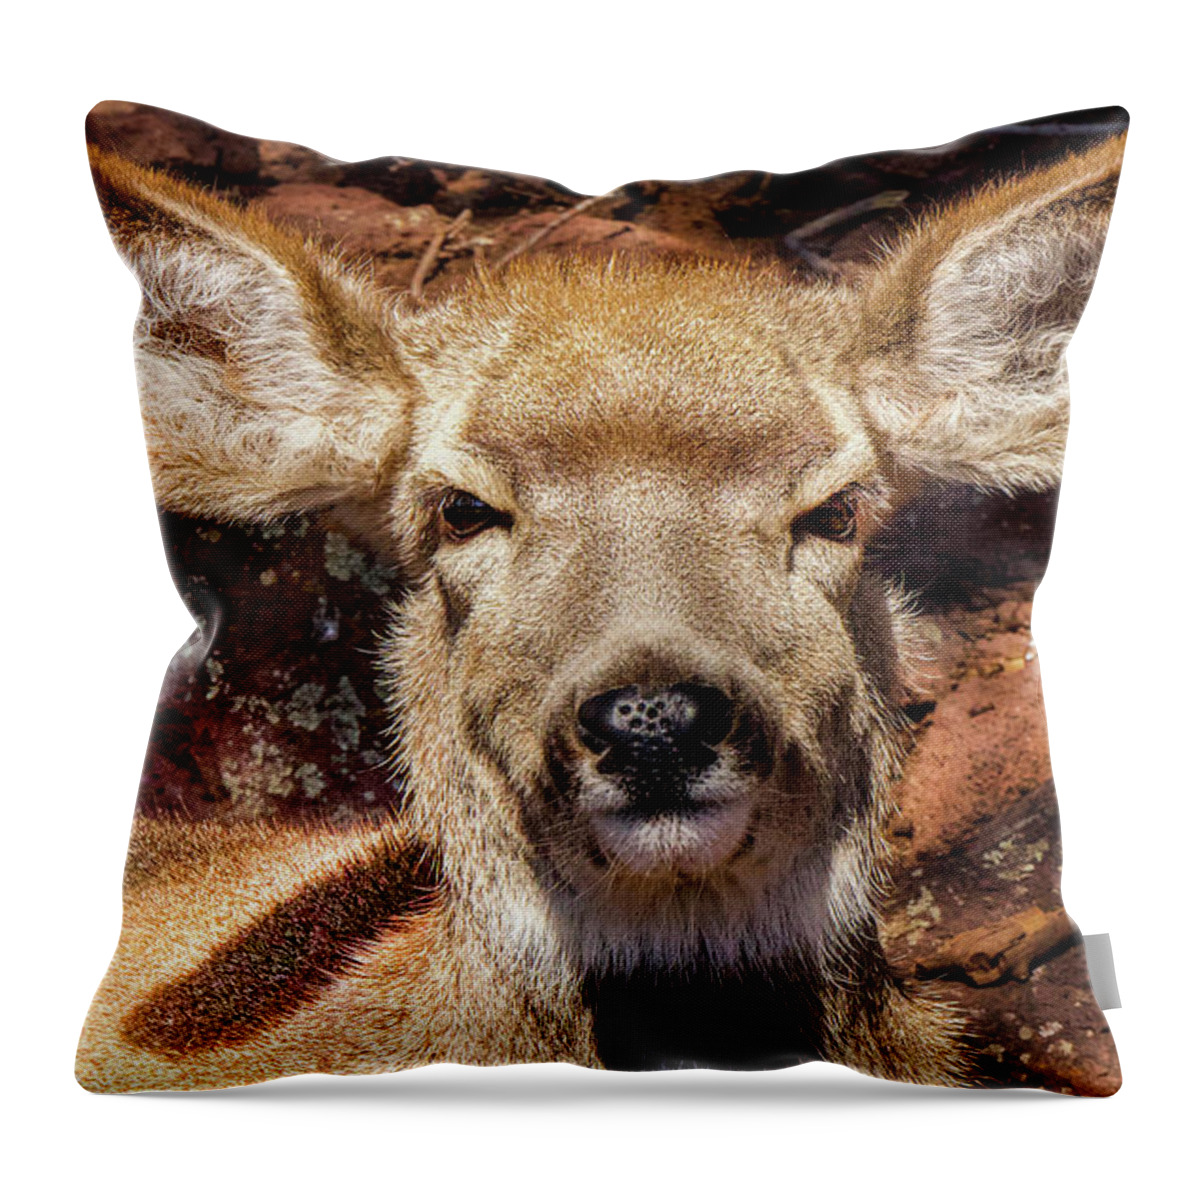 Deer Throw Pillow featuring the photograph A Mule Deer by Laura Putman